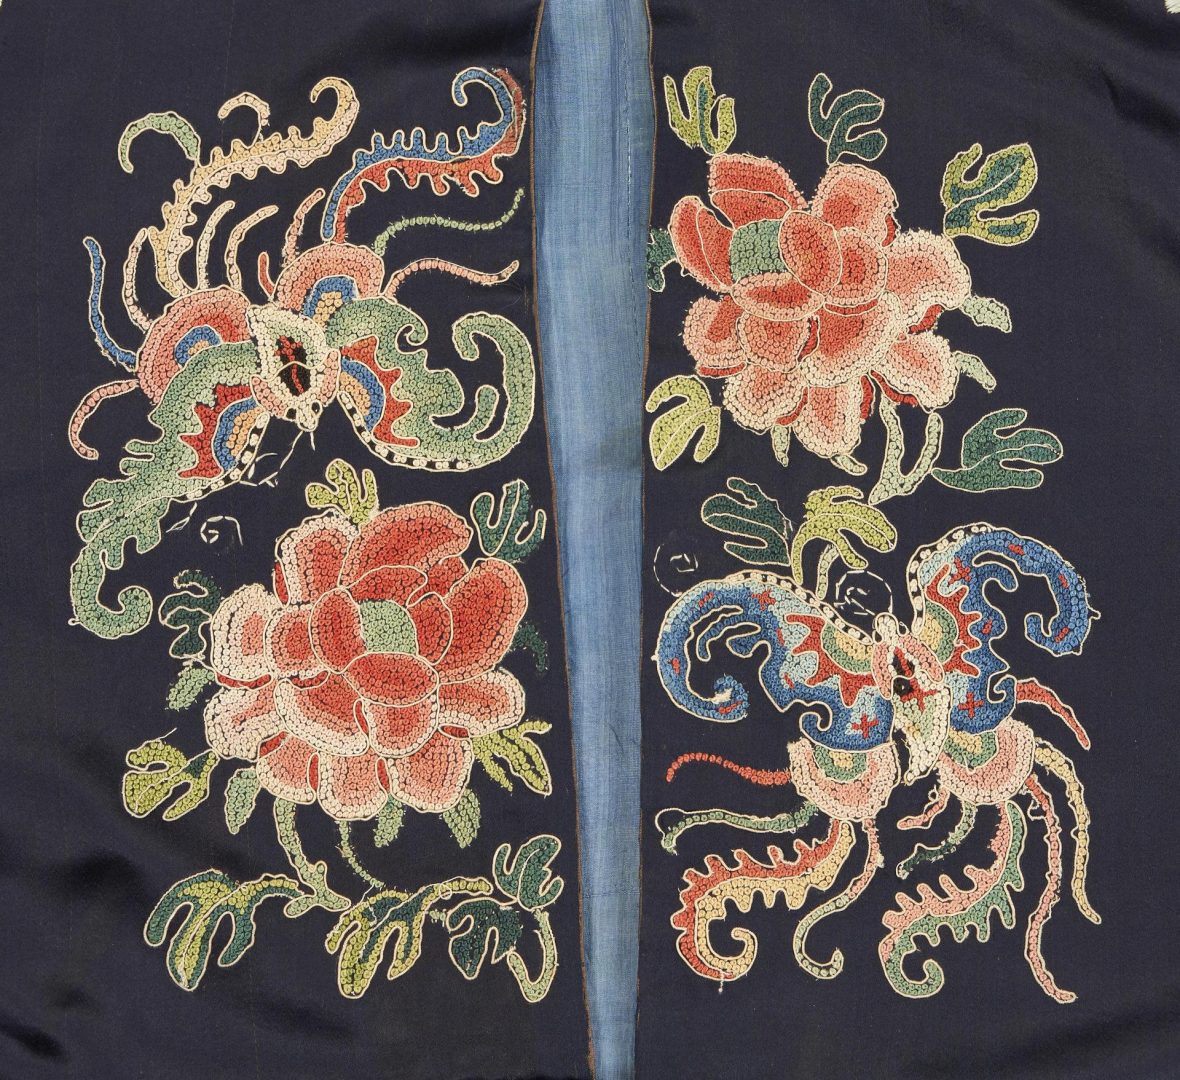 Lot 32: Chinese Blue Silk Robe w/ Forbidden Stitch